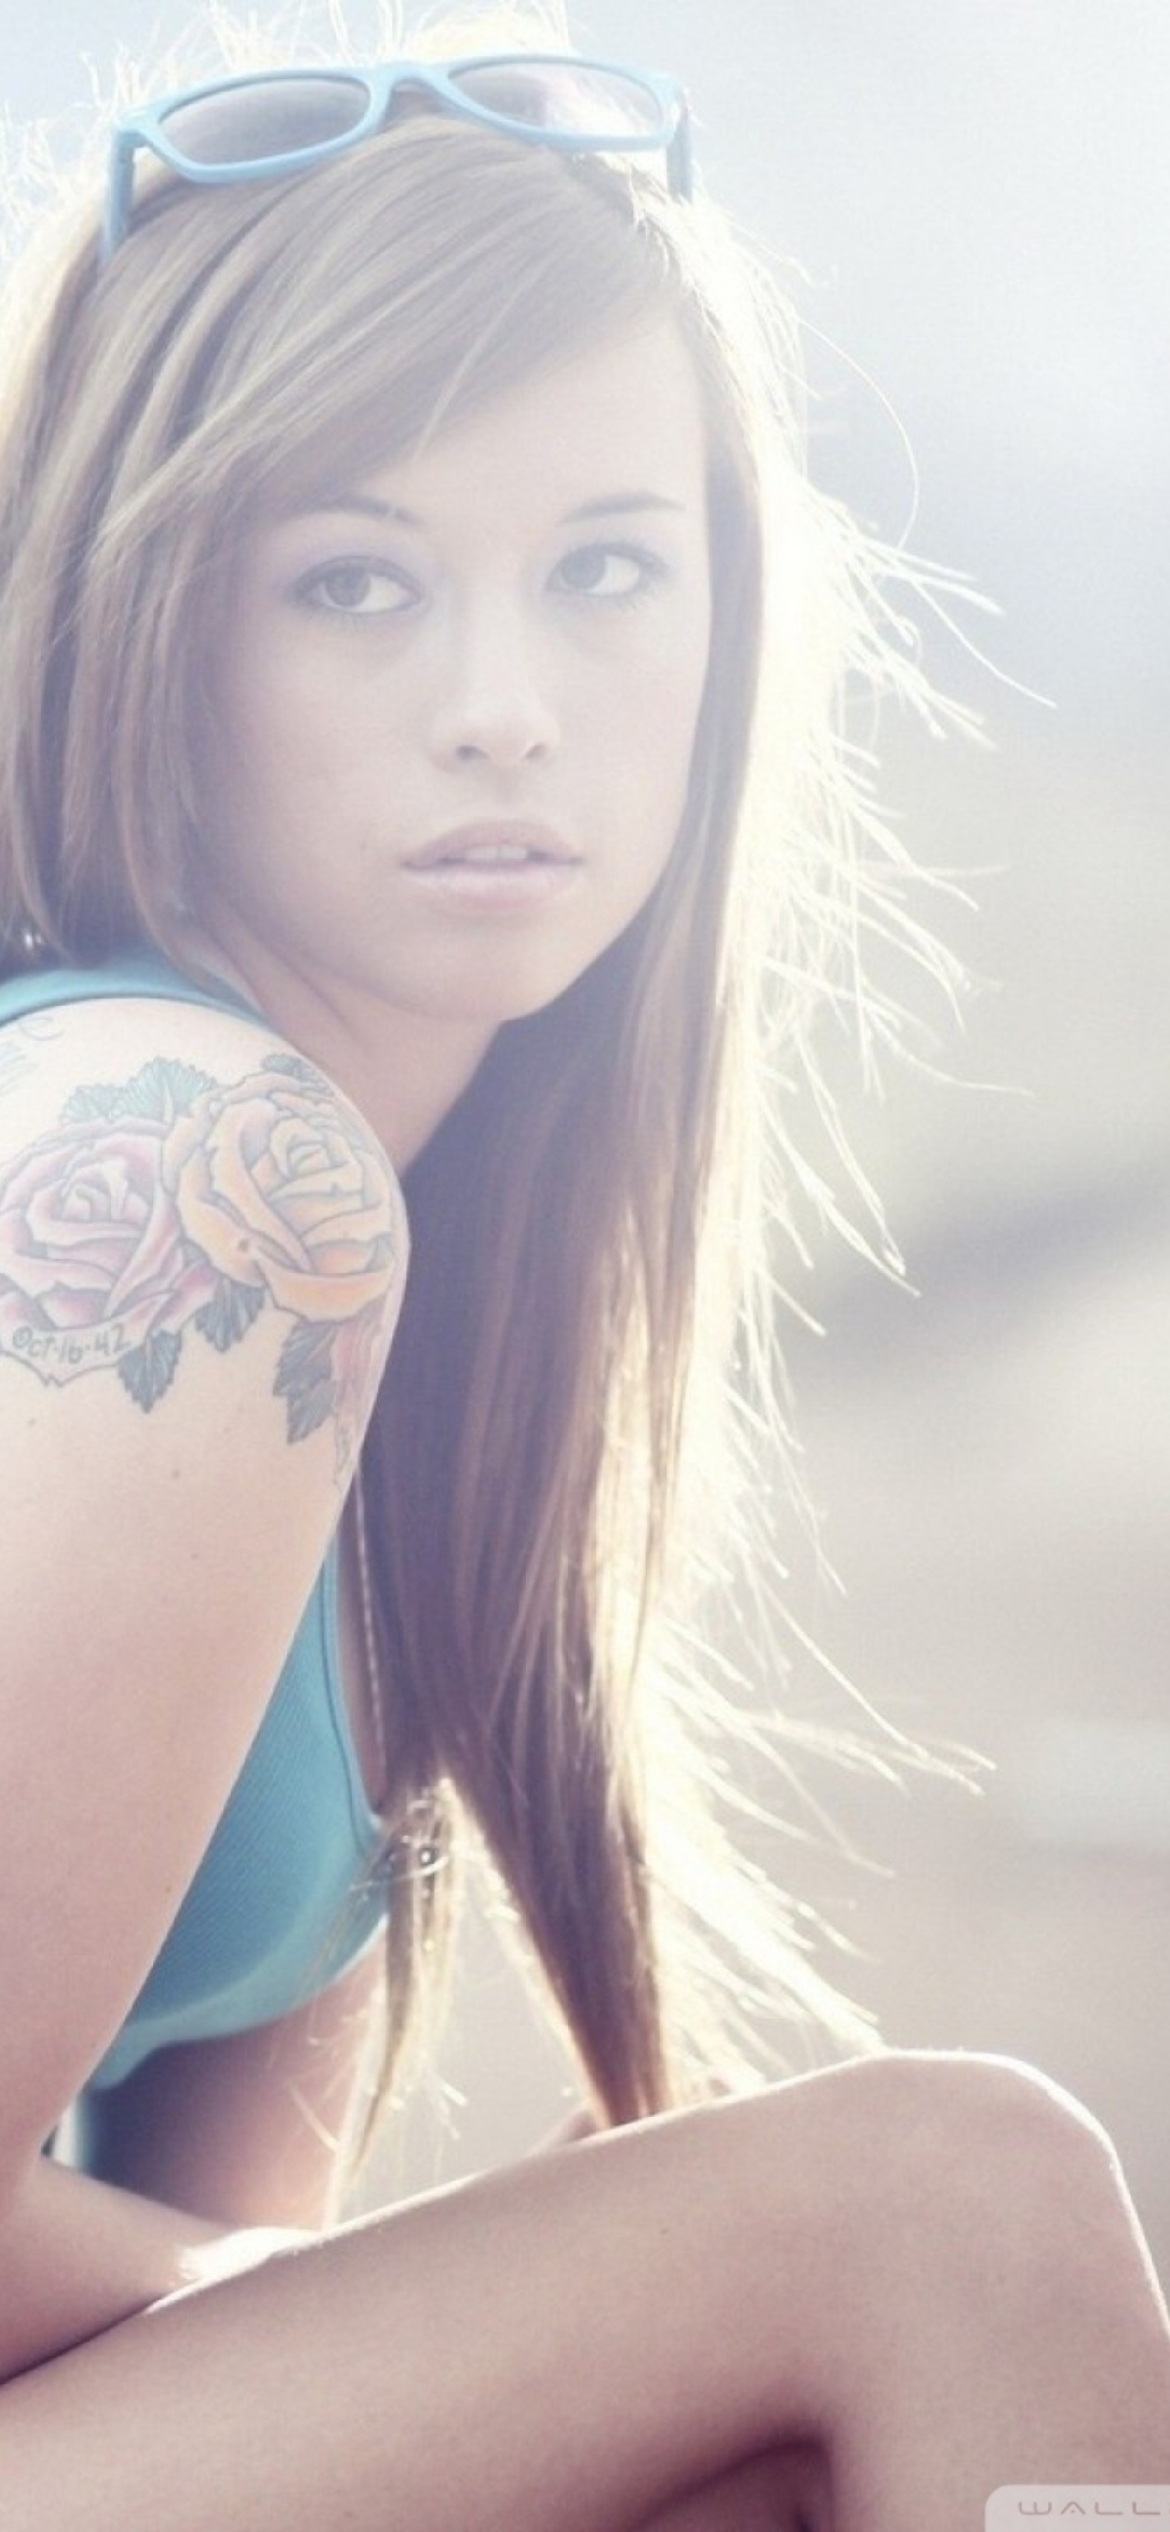 Sfondi Beautiful Girl With Long Blonde Hair And Rose Tattoo 1170x2532